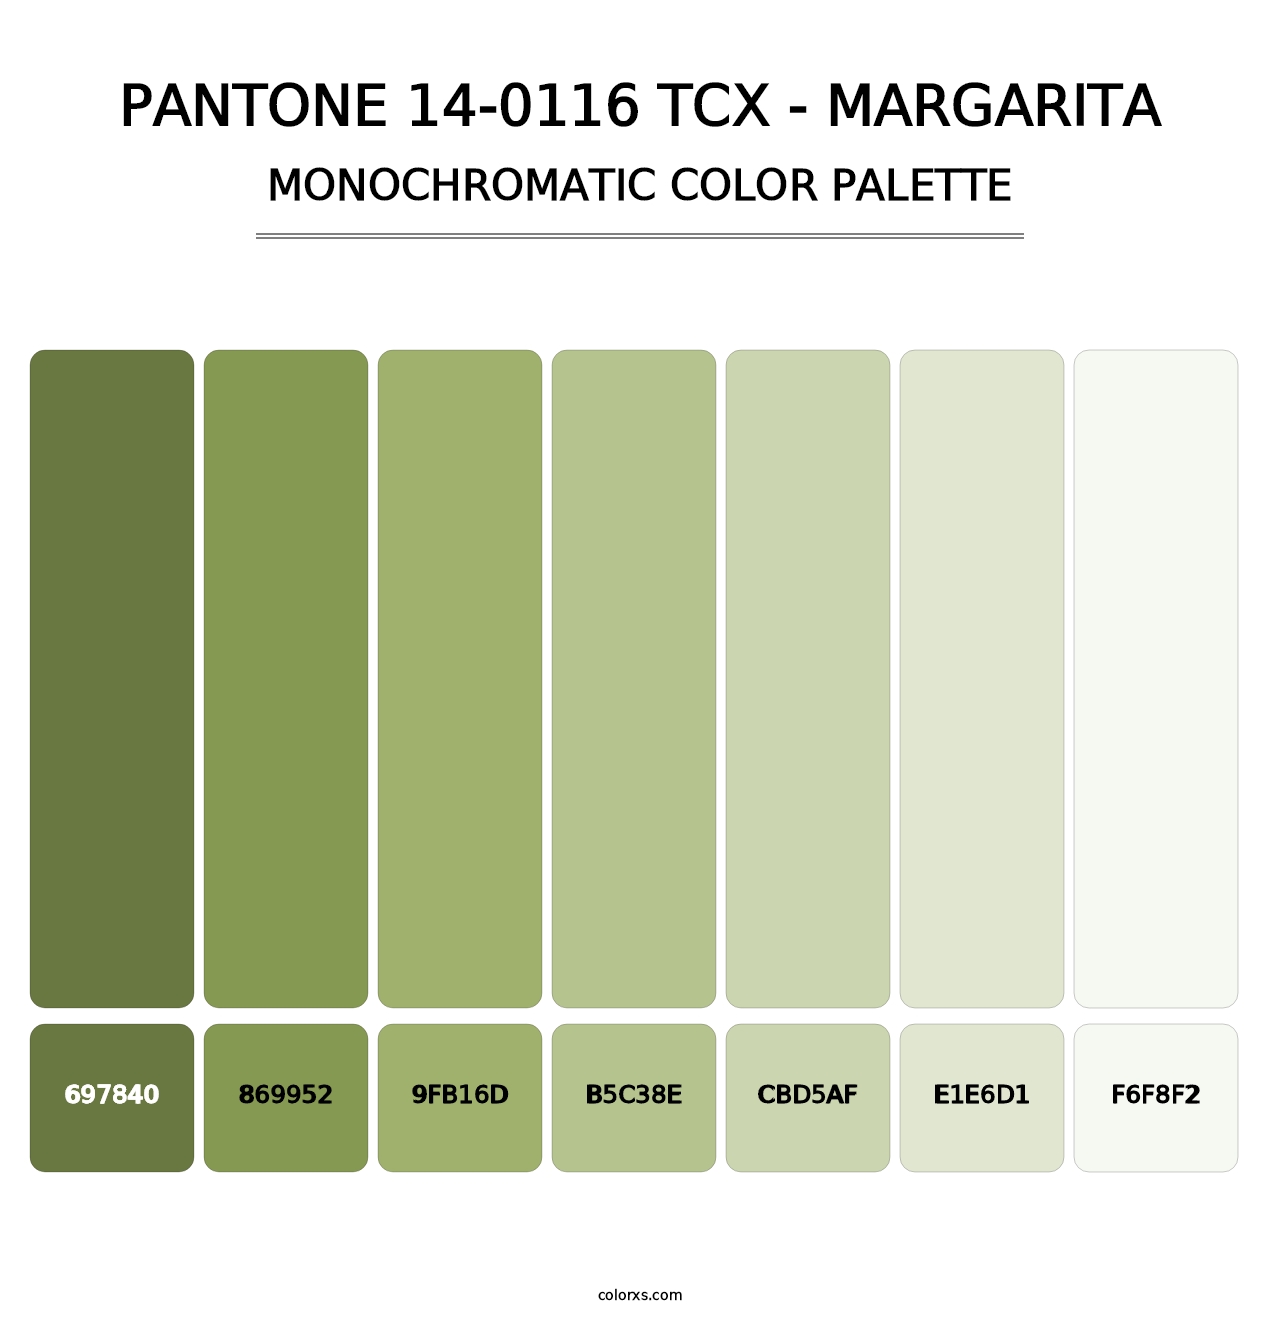 PANTONE 14-0116 TCX - Margarita - Monochromatic Color Palette